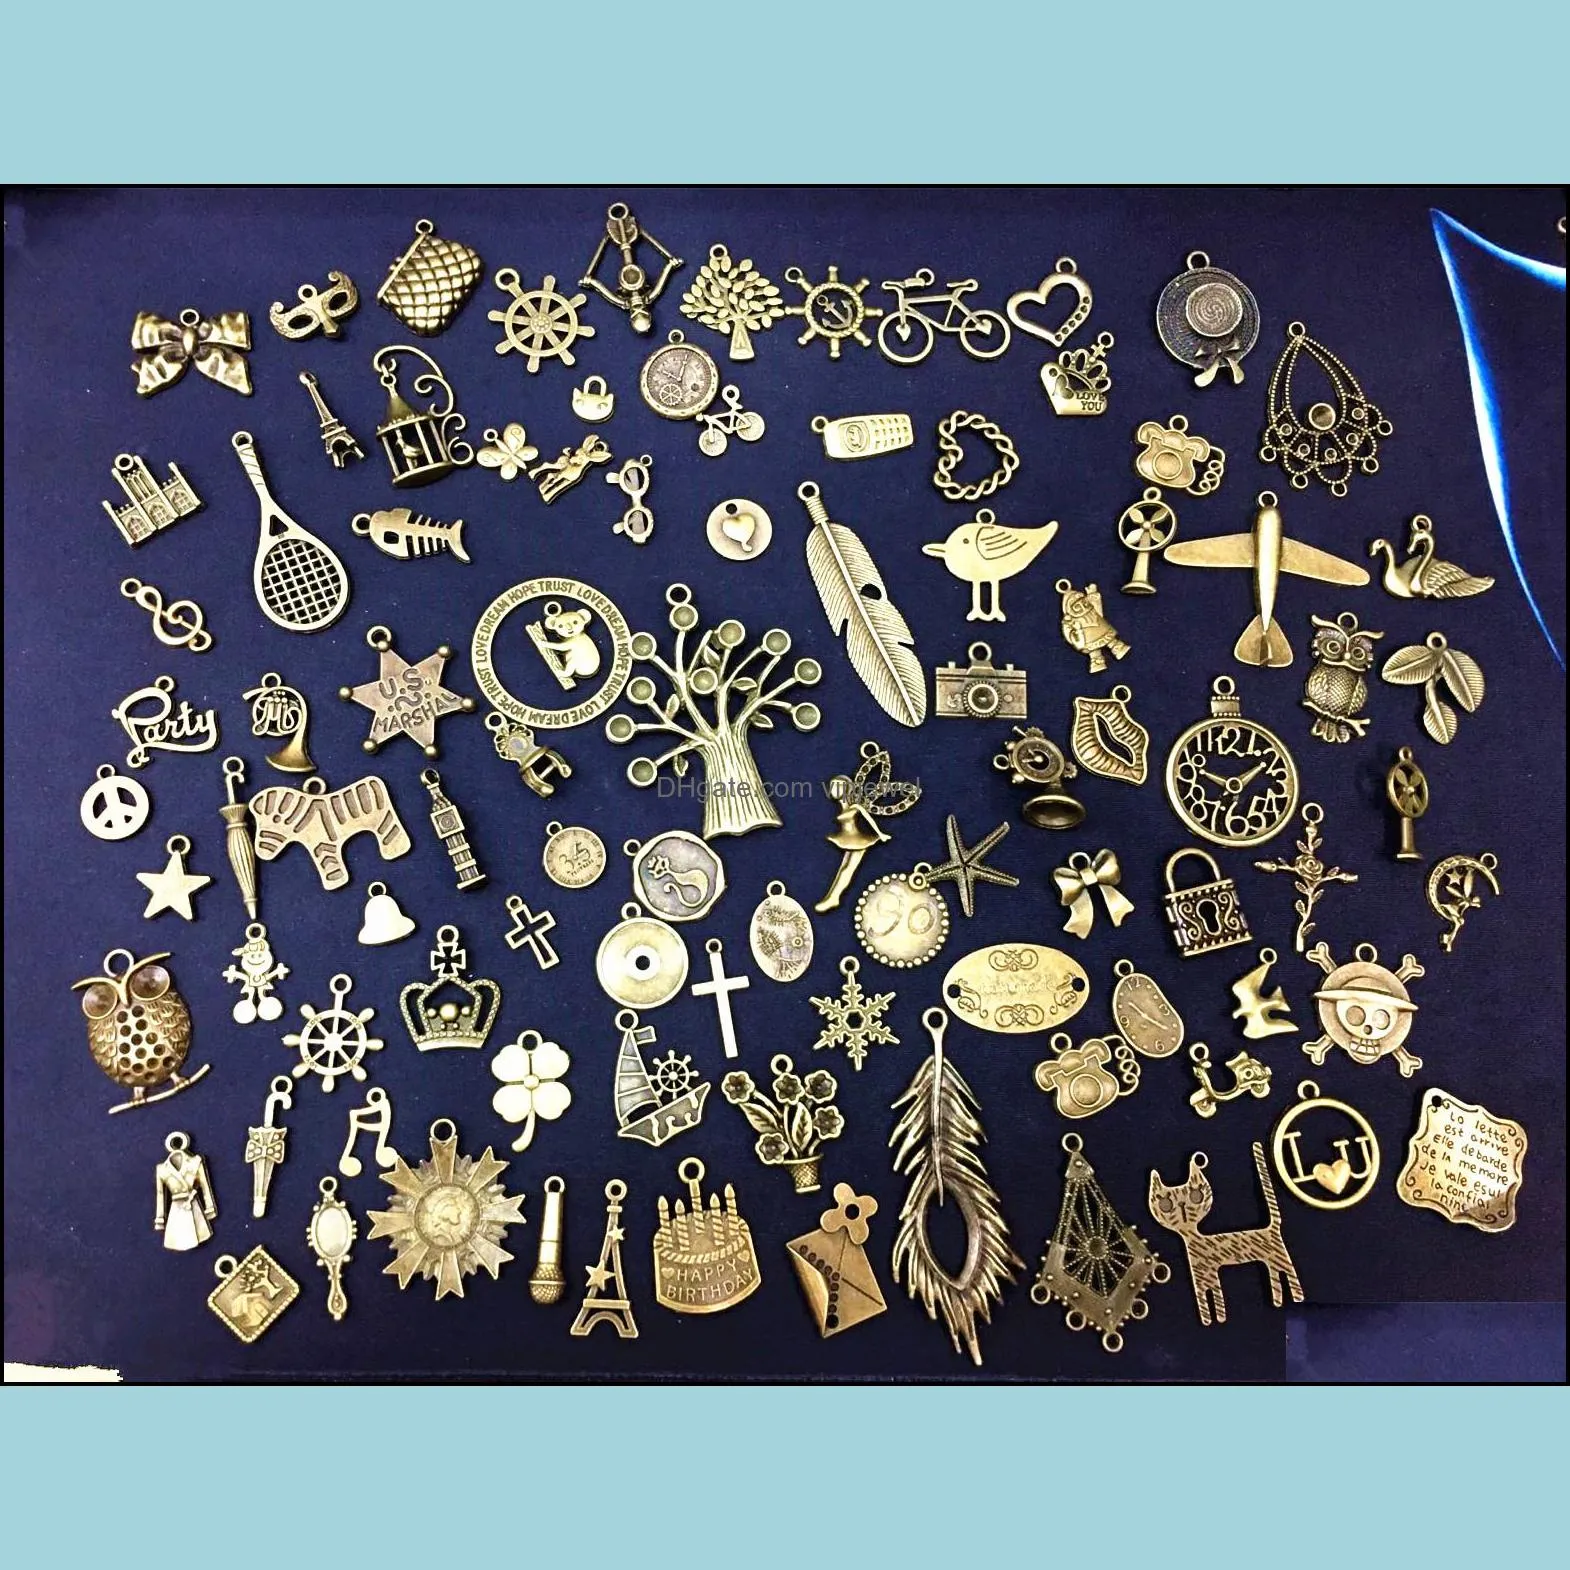 diy handmade materials antique small accessories wholesale 96 models mix jewelry necklace bracelet pendants support fba drop 